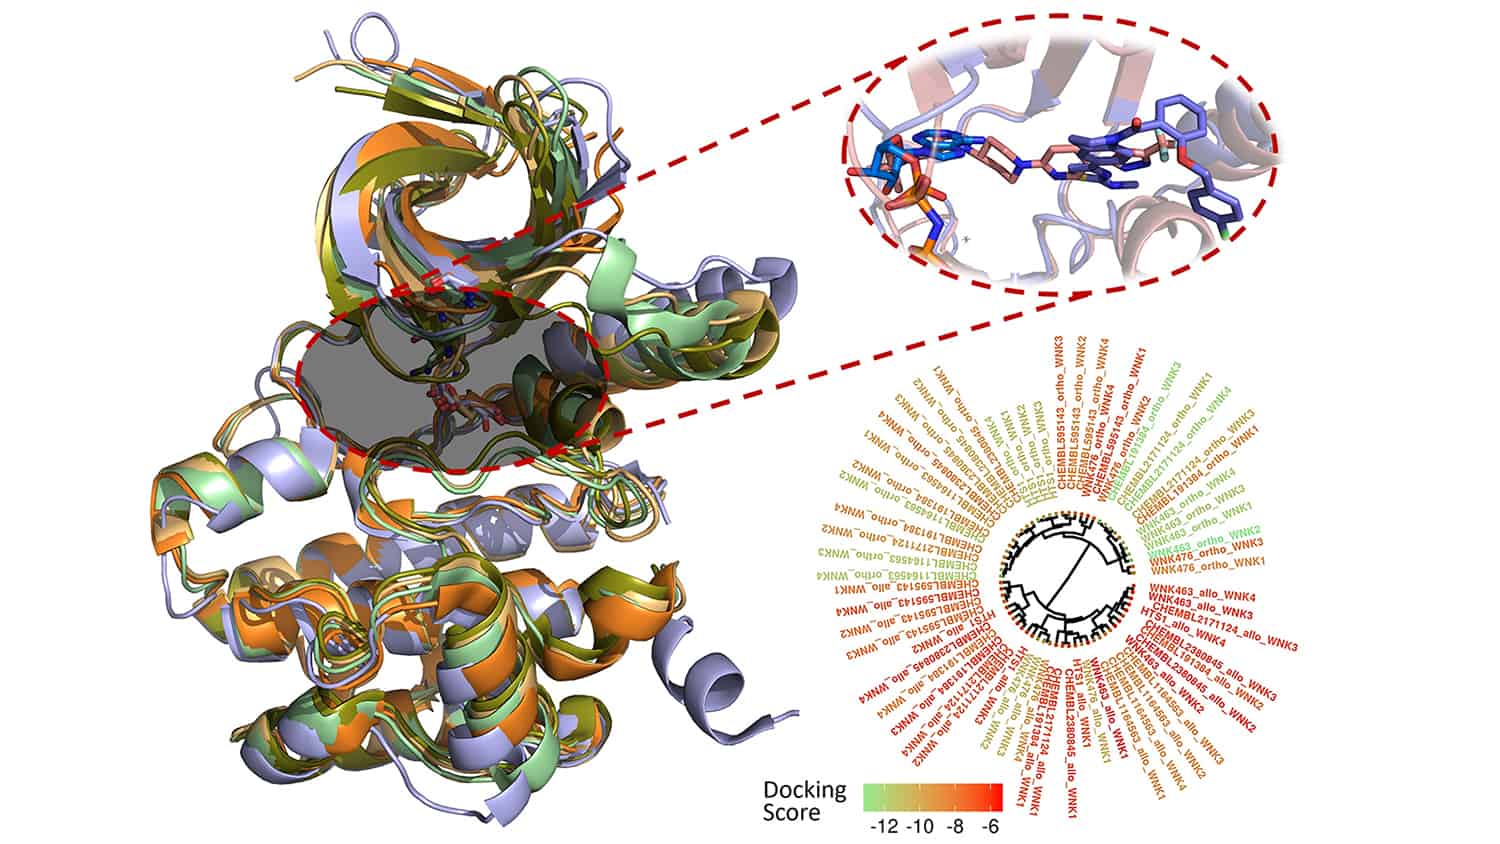 computer modeling of WNK kinase inhibitors